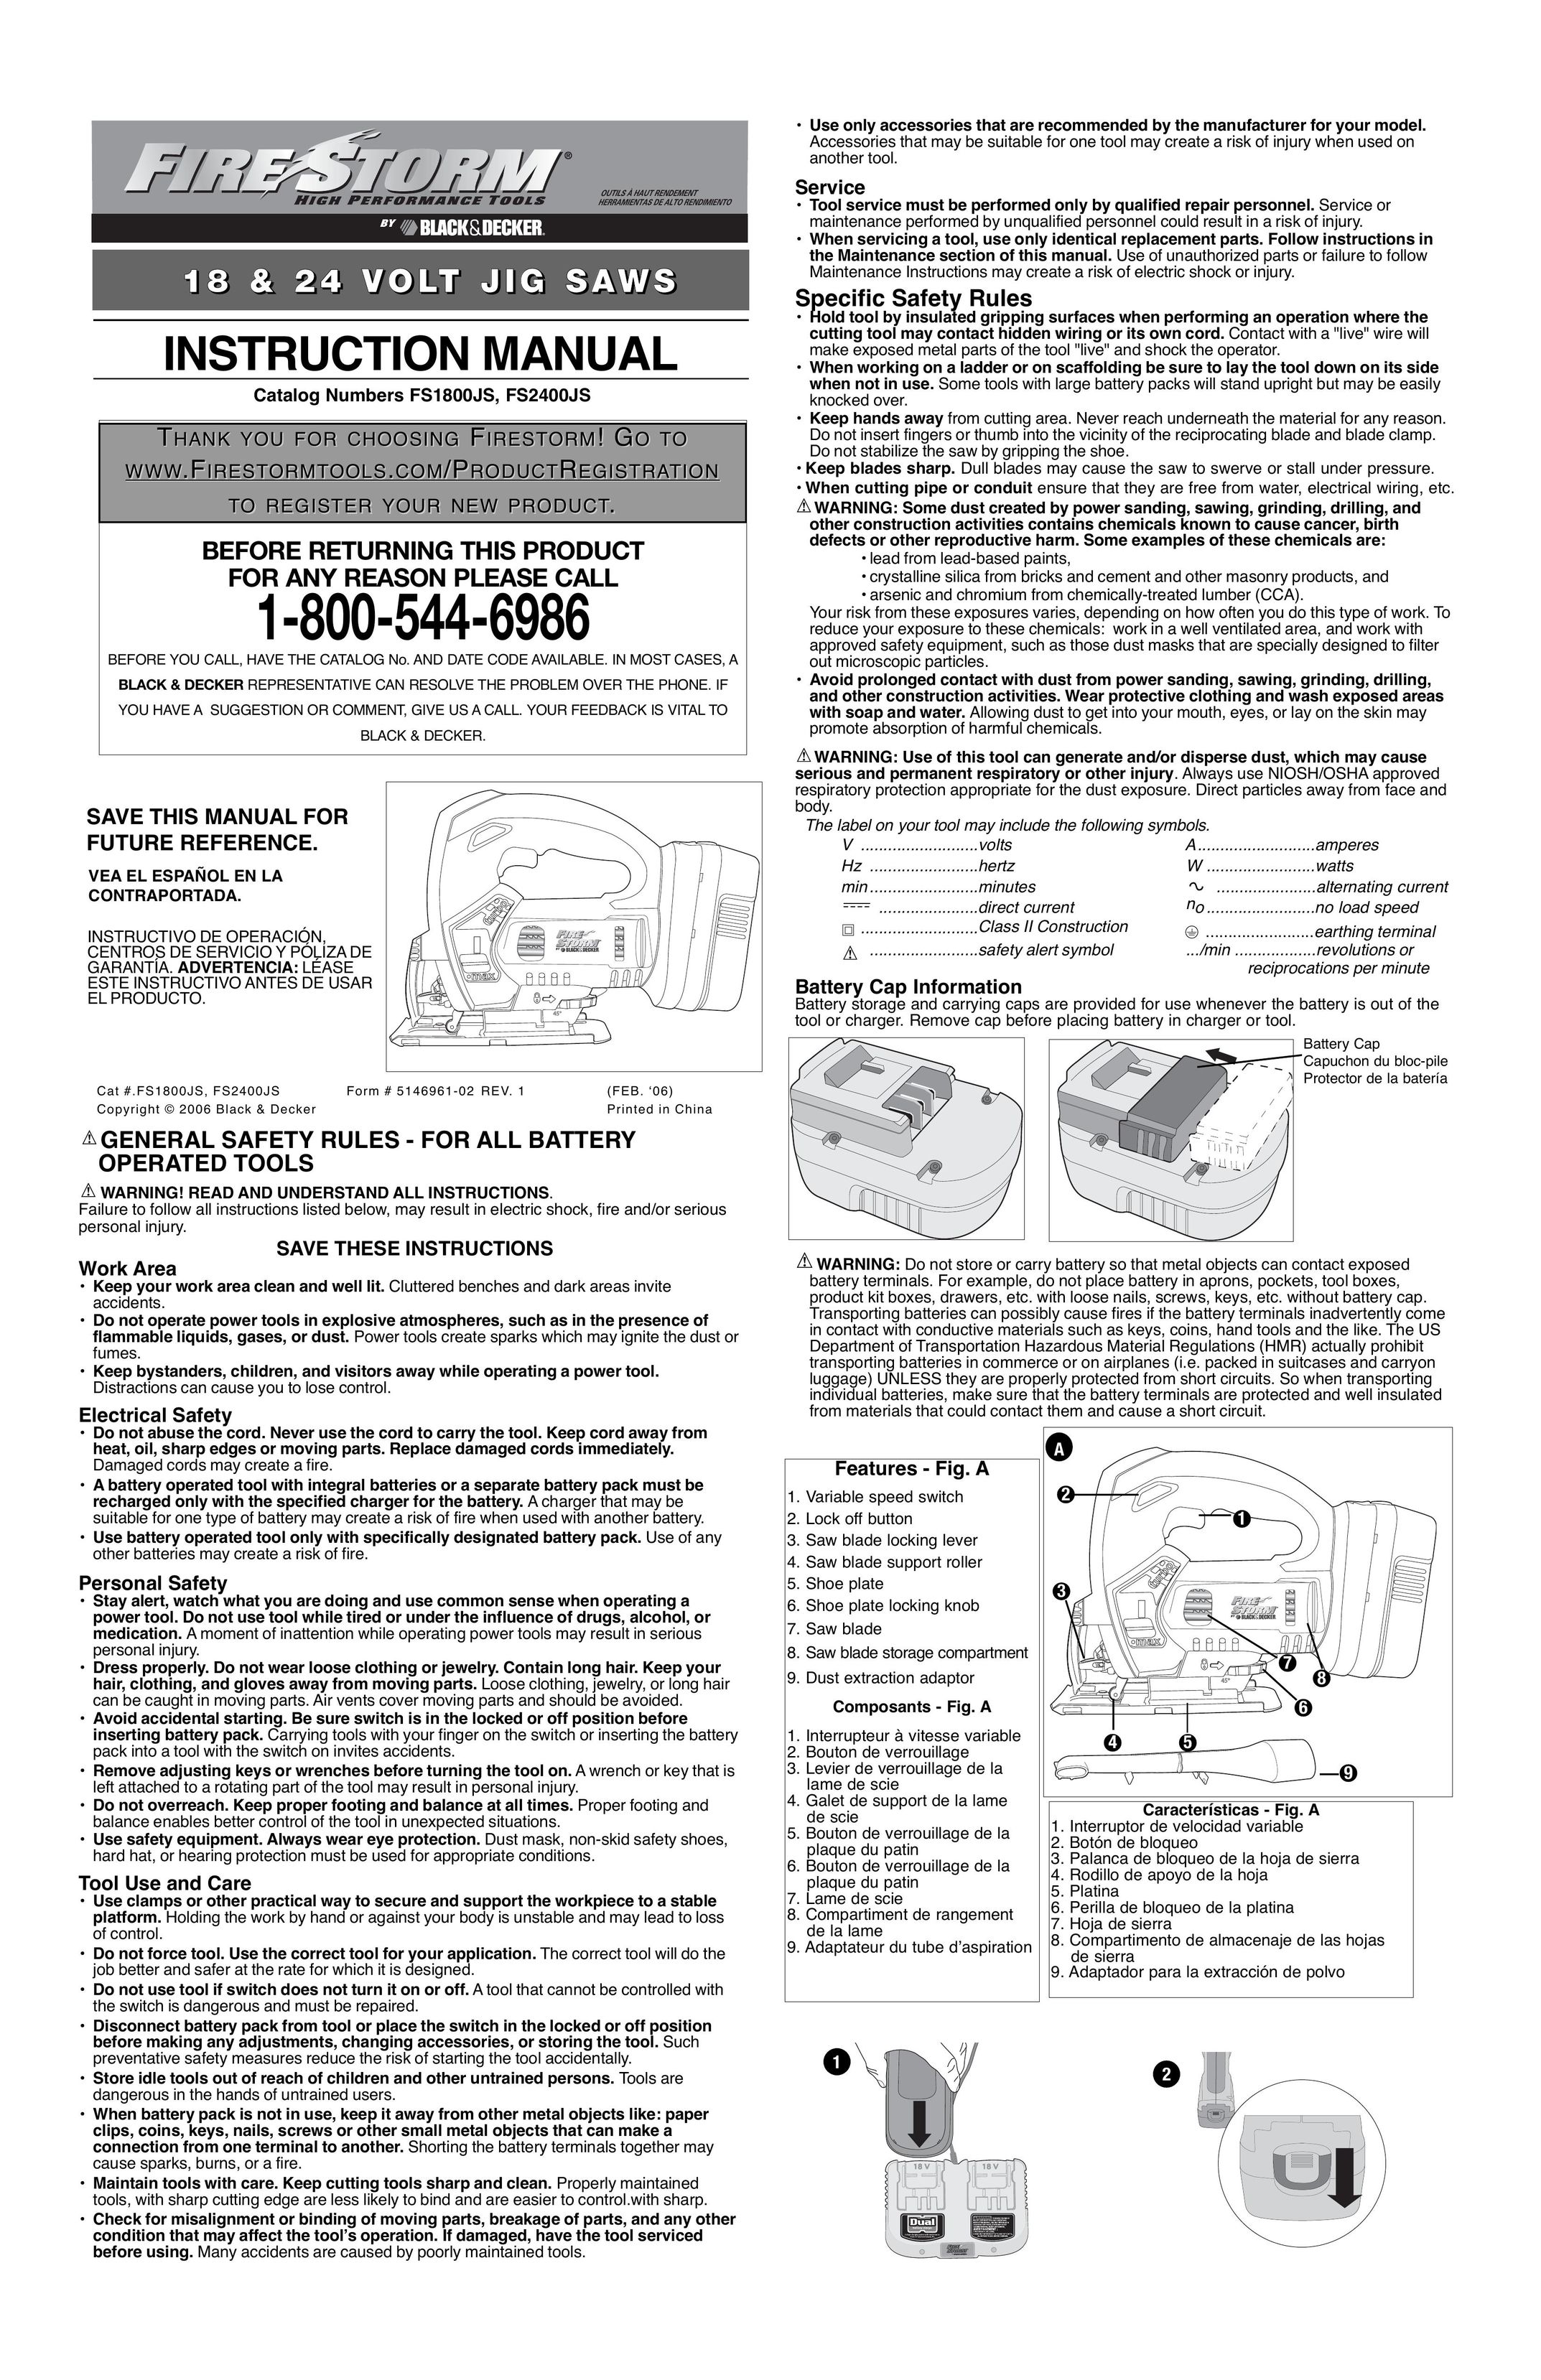 Black & Decker 5146961-02 Saw User Manual